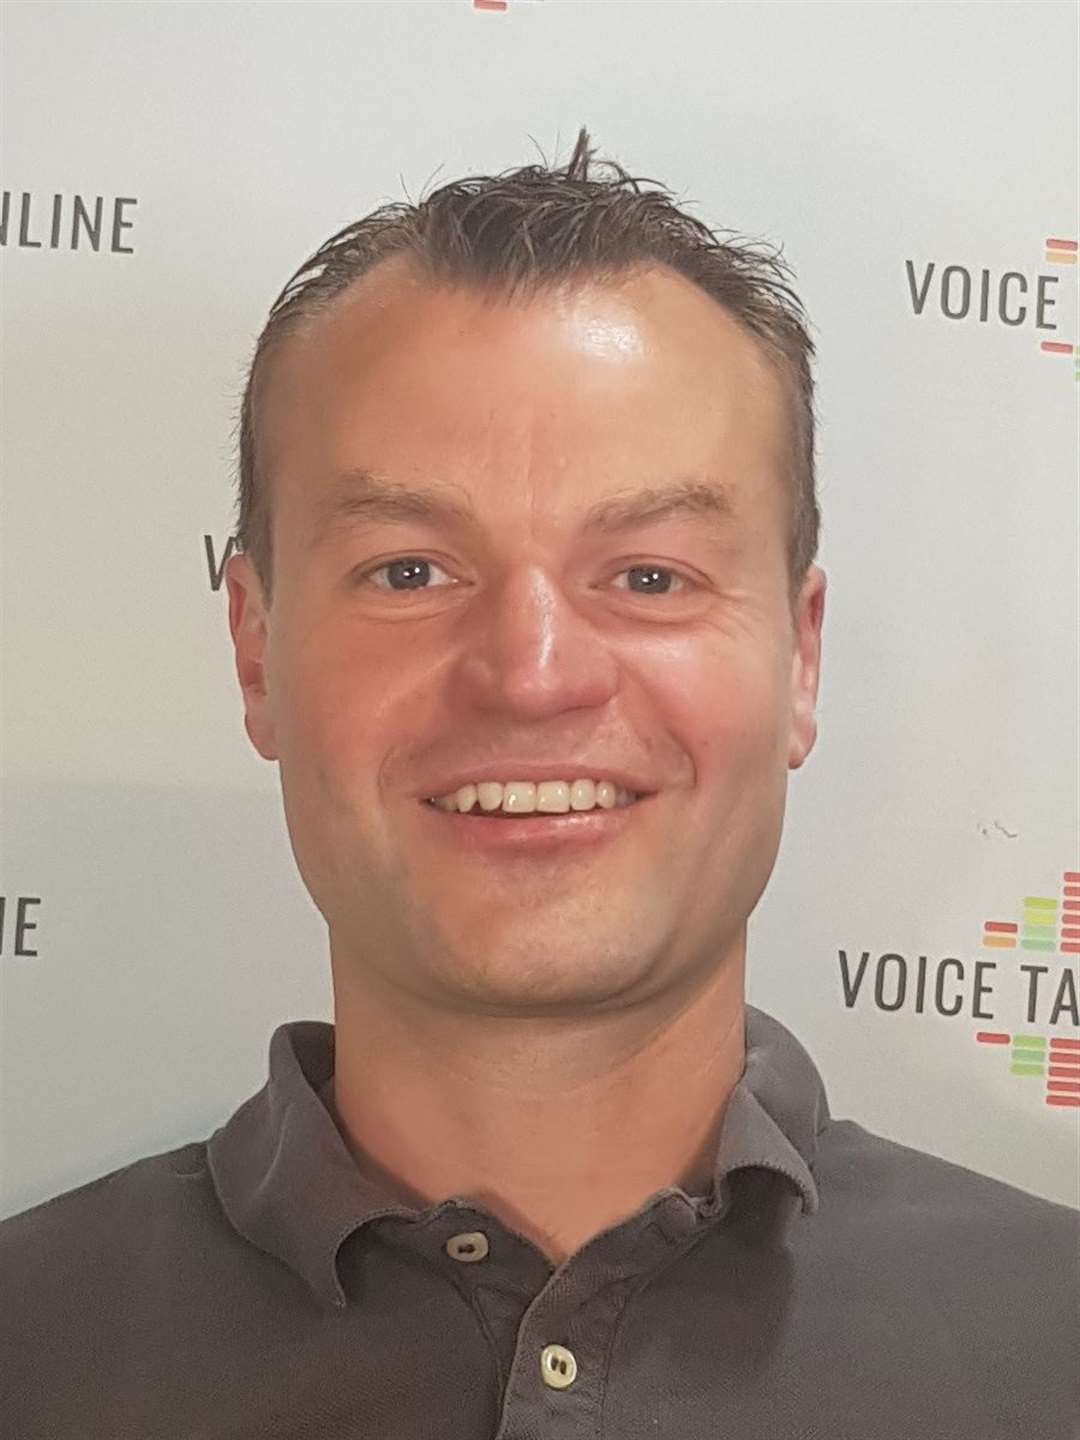 Voice Talent Online chief executive Simon Luckhurst